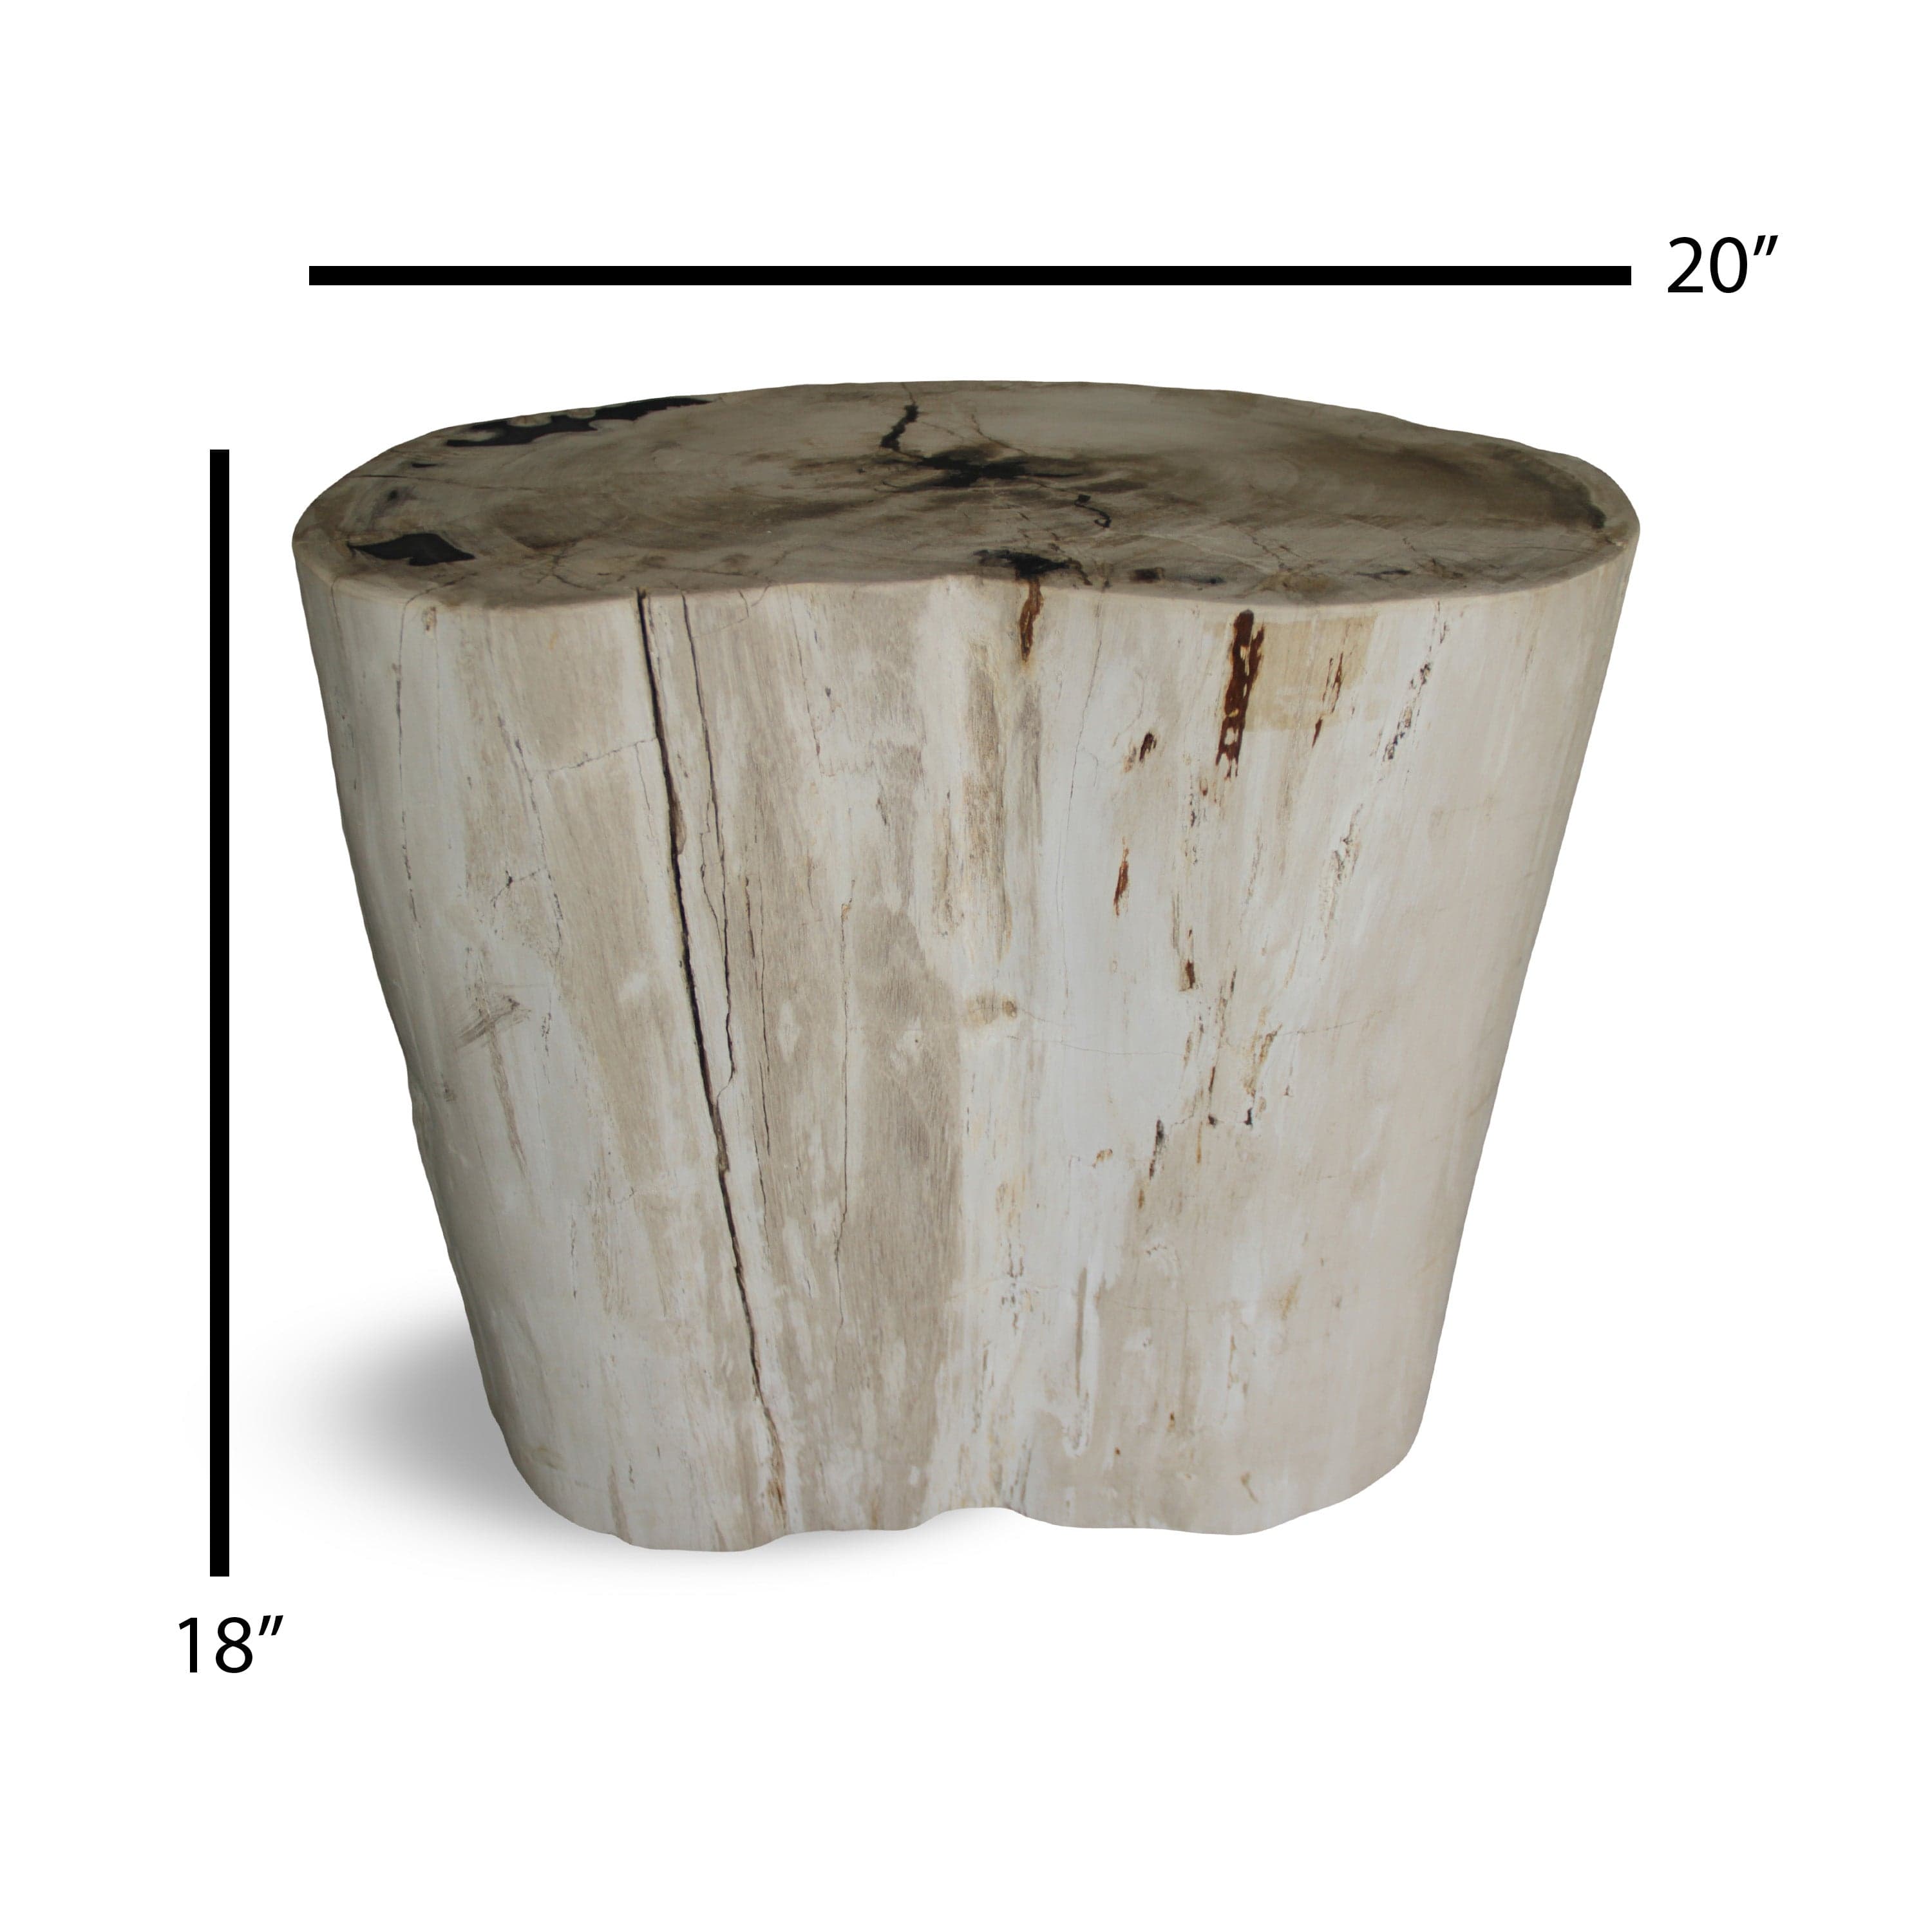 Kalifano Petrified Wood Petrified Wood Round Stump / Stool from Indonesia - 46" / 271 lbs PWS5000.005